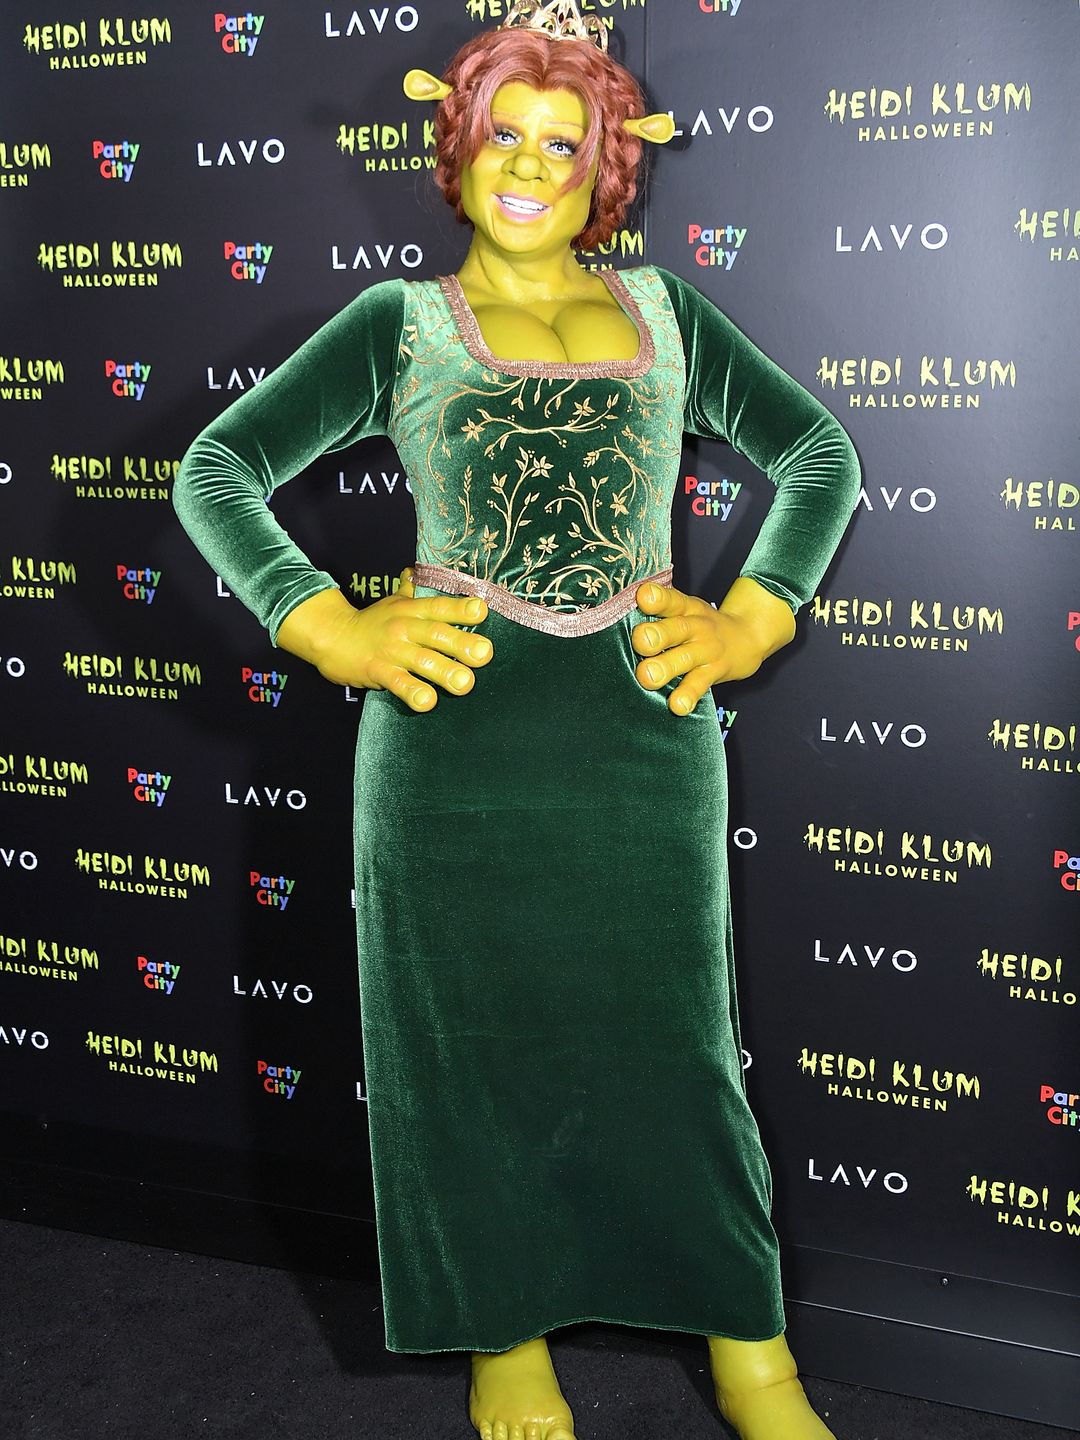 Heidi Klum as Princess Fiona from Shrek